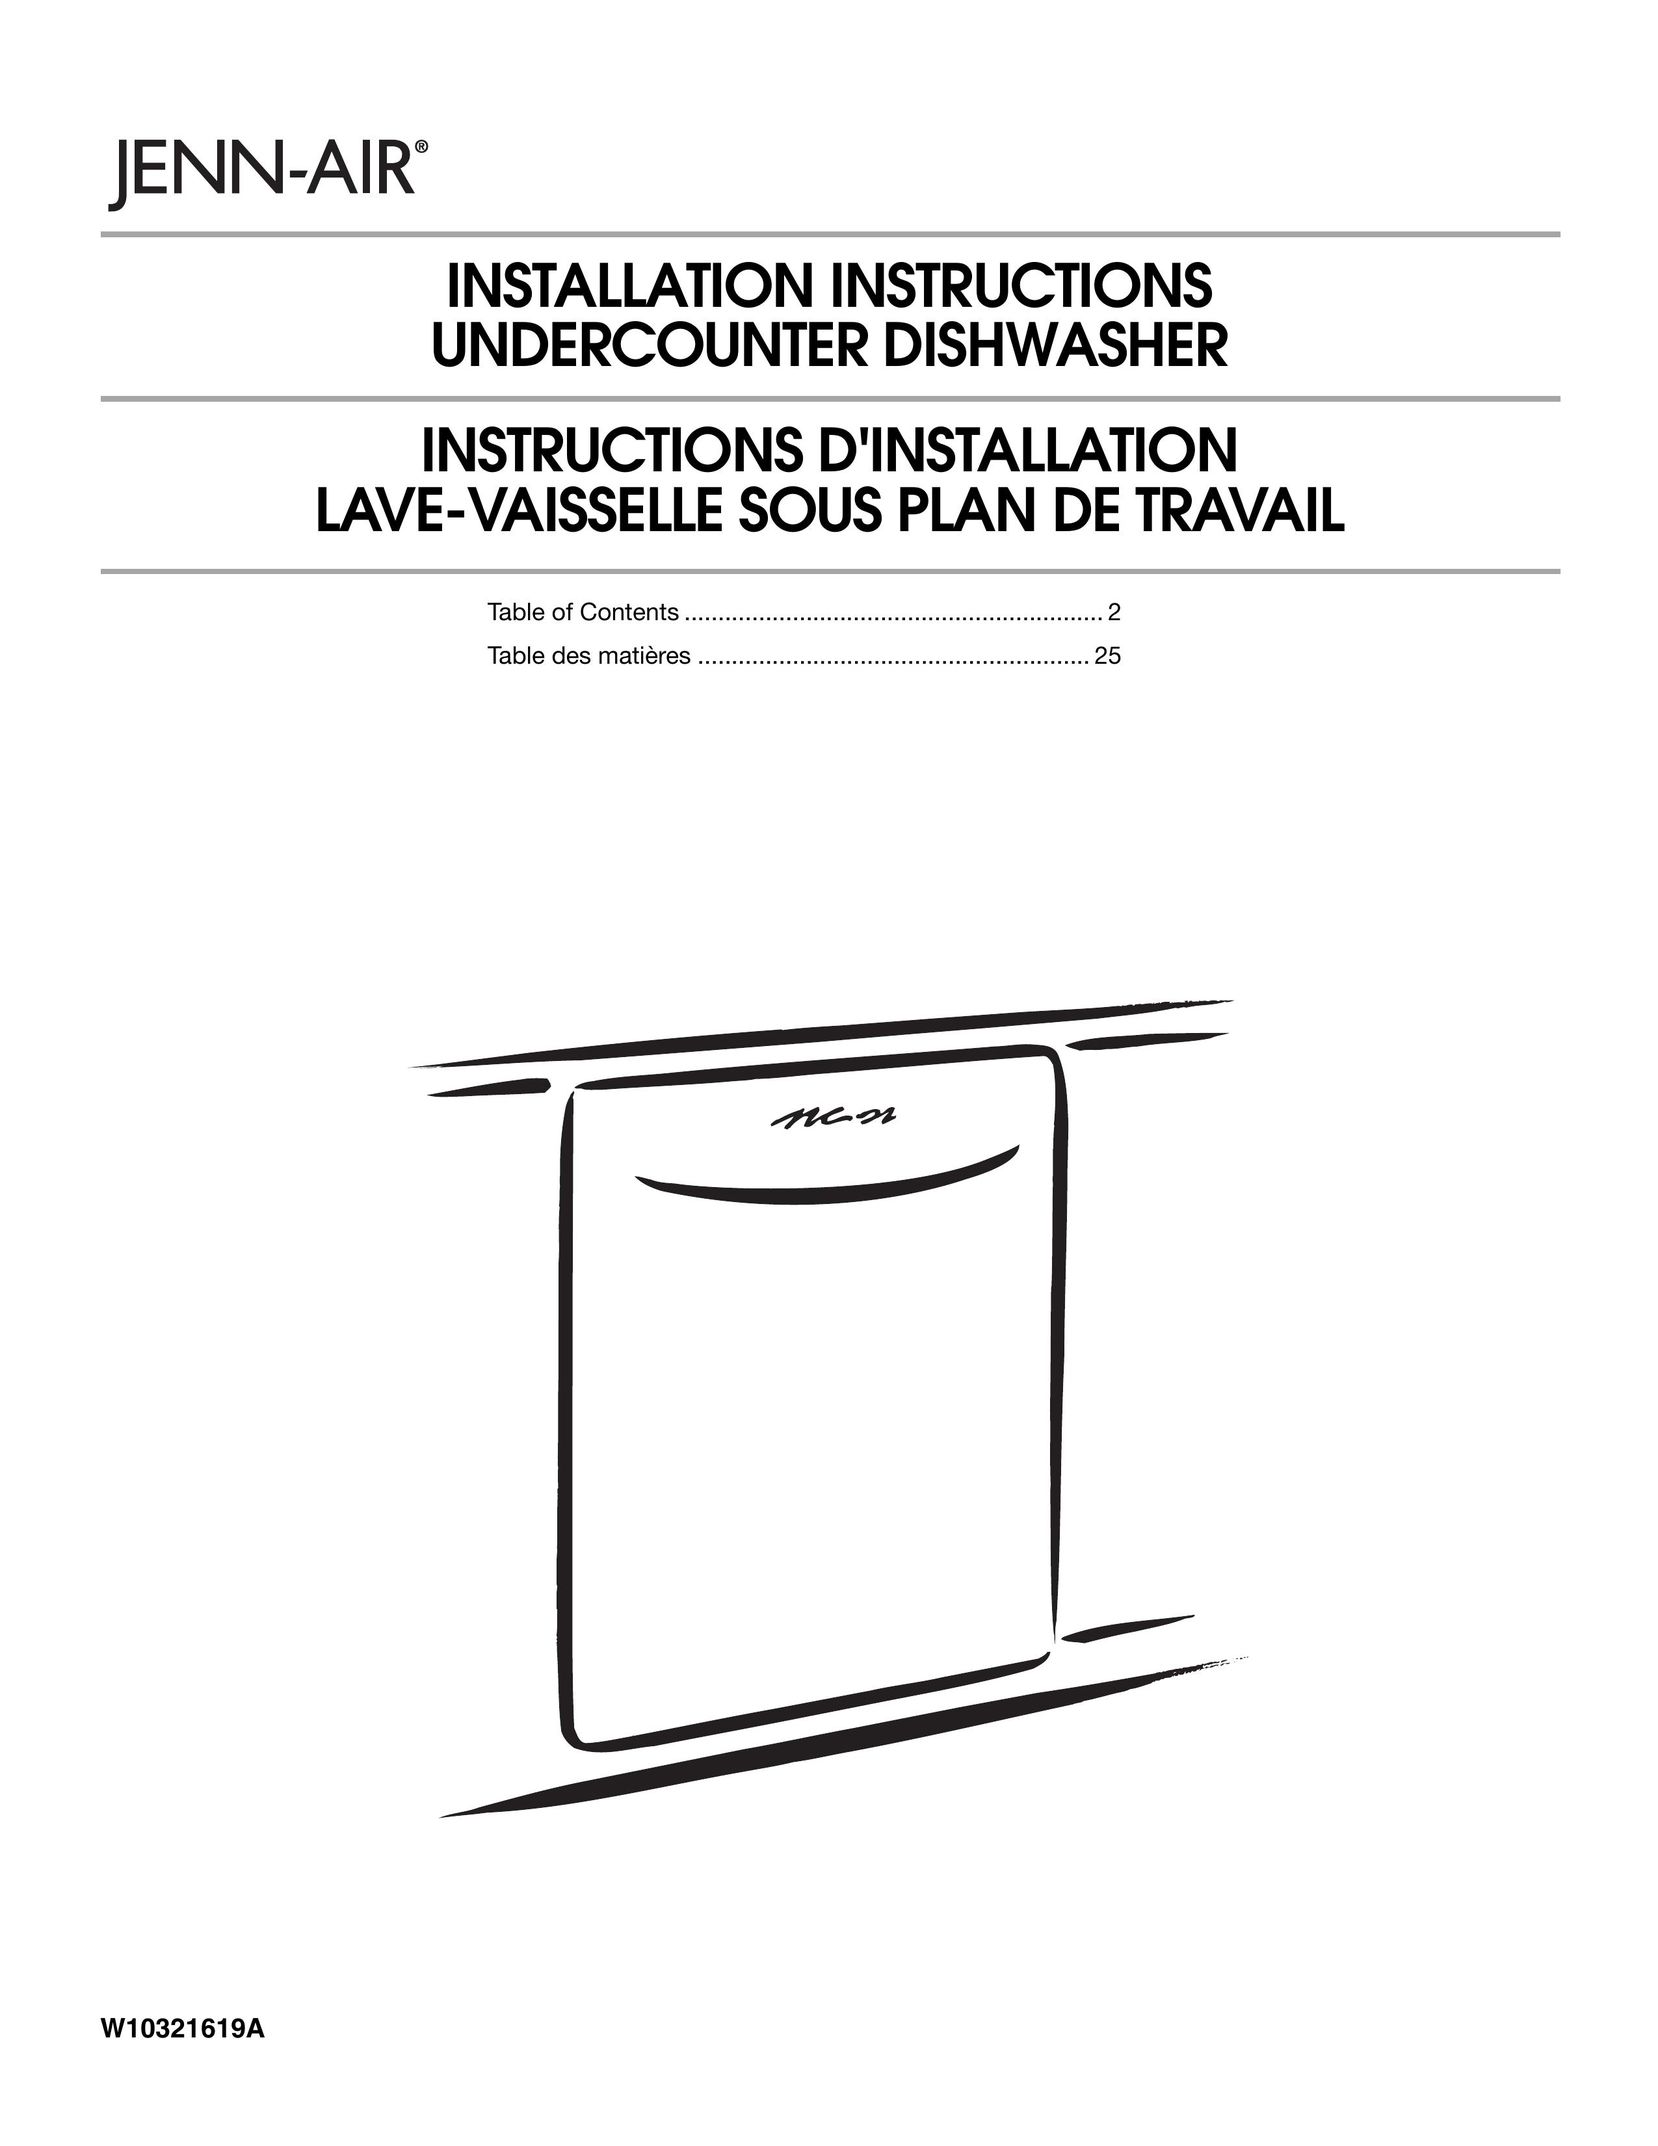 Jenn-Air W10321619A Dishwasher User Manual